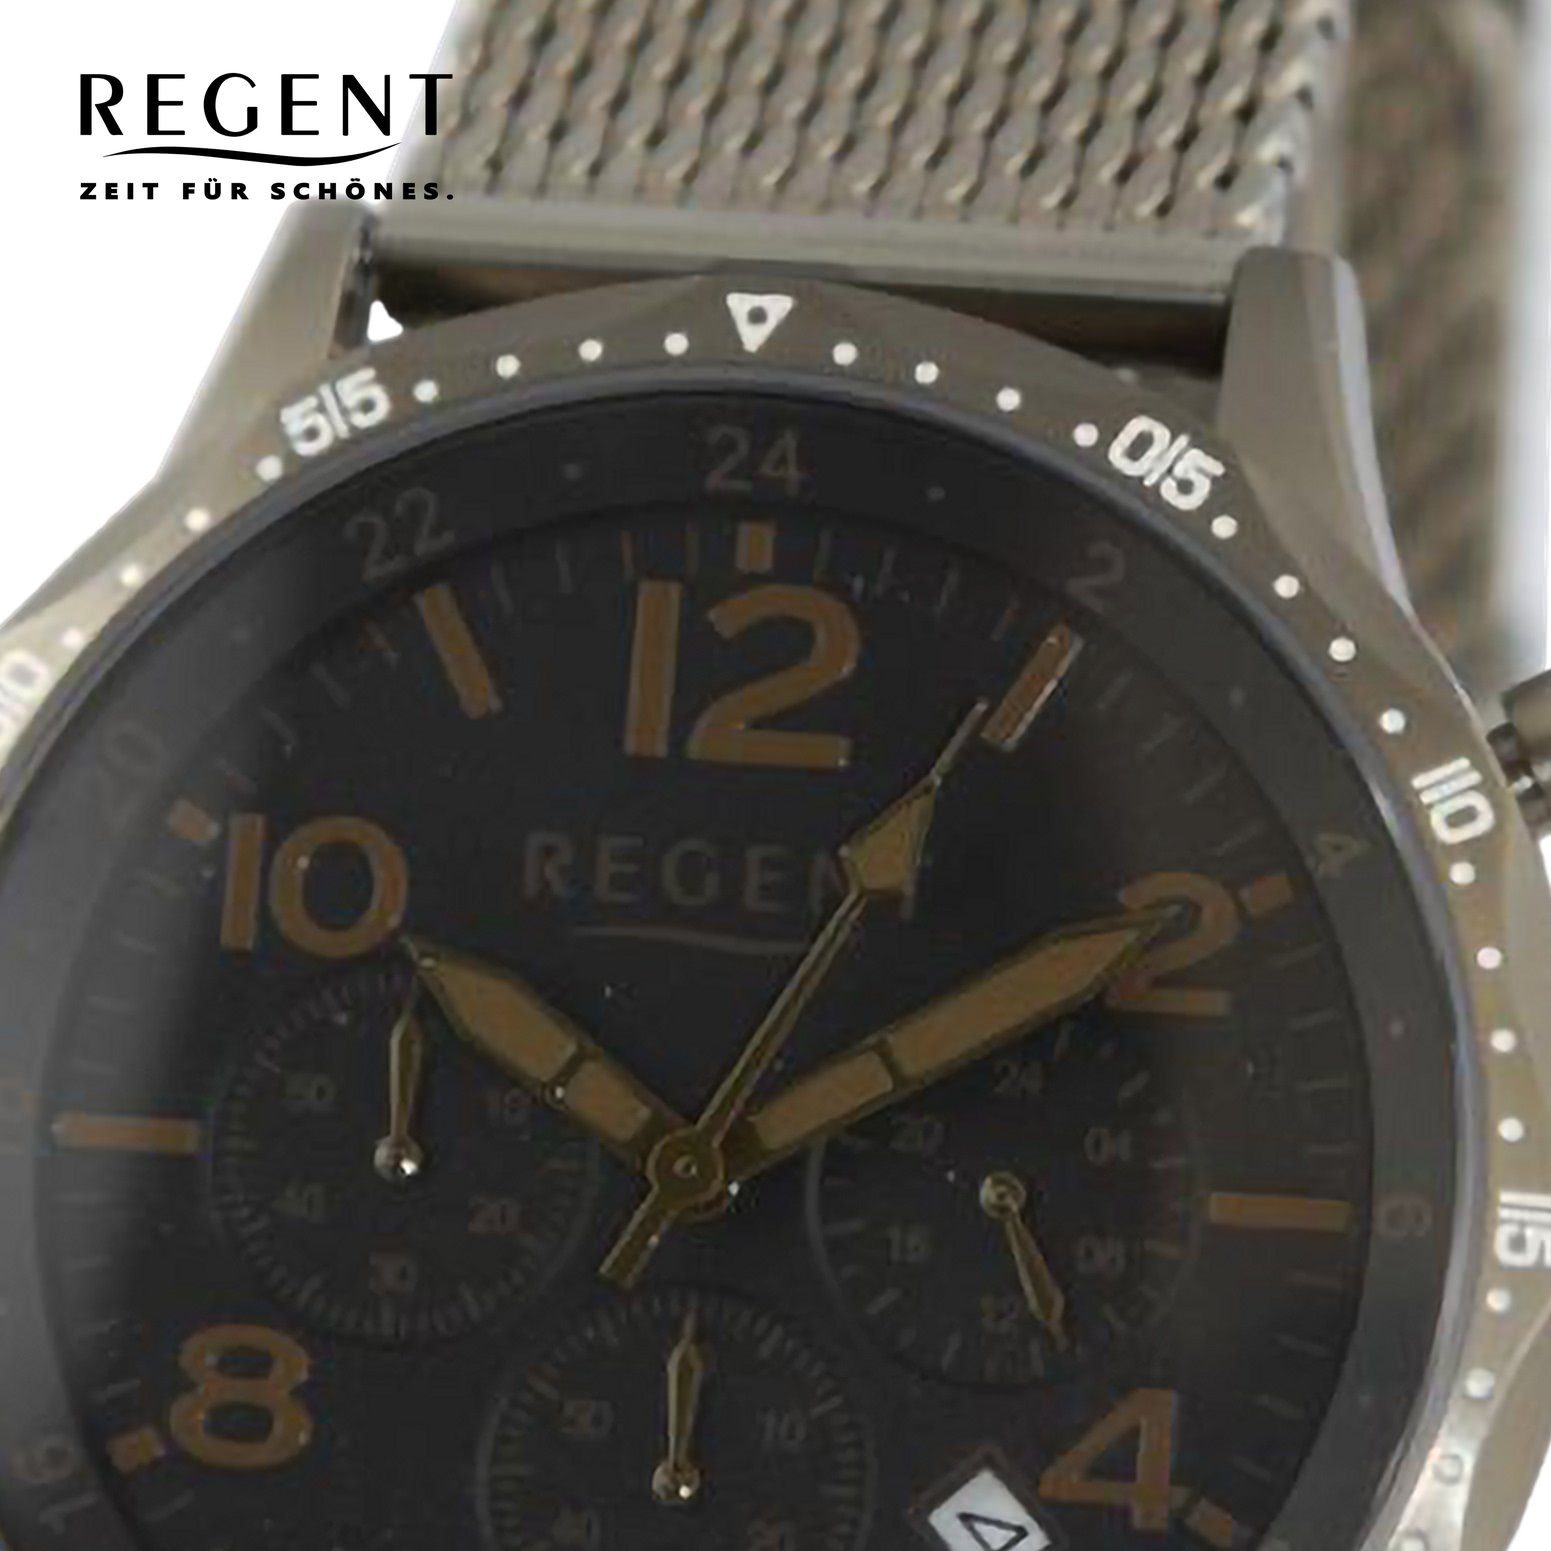 Analog, Quarzuhr Armbanduhr Metallarmband Armbanduhr extra Herren (ca. Regent Regent rund, 44mm), Herren groß